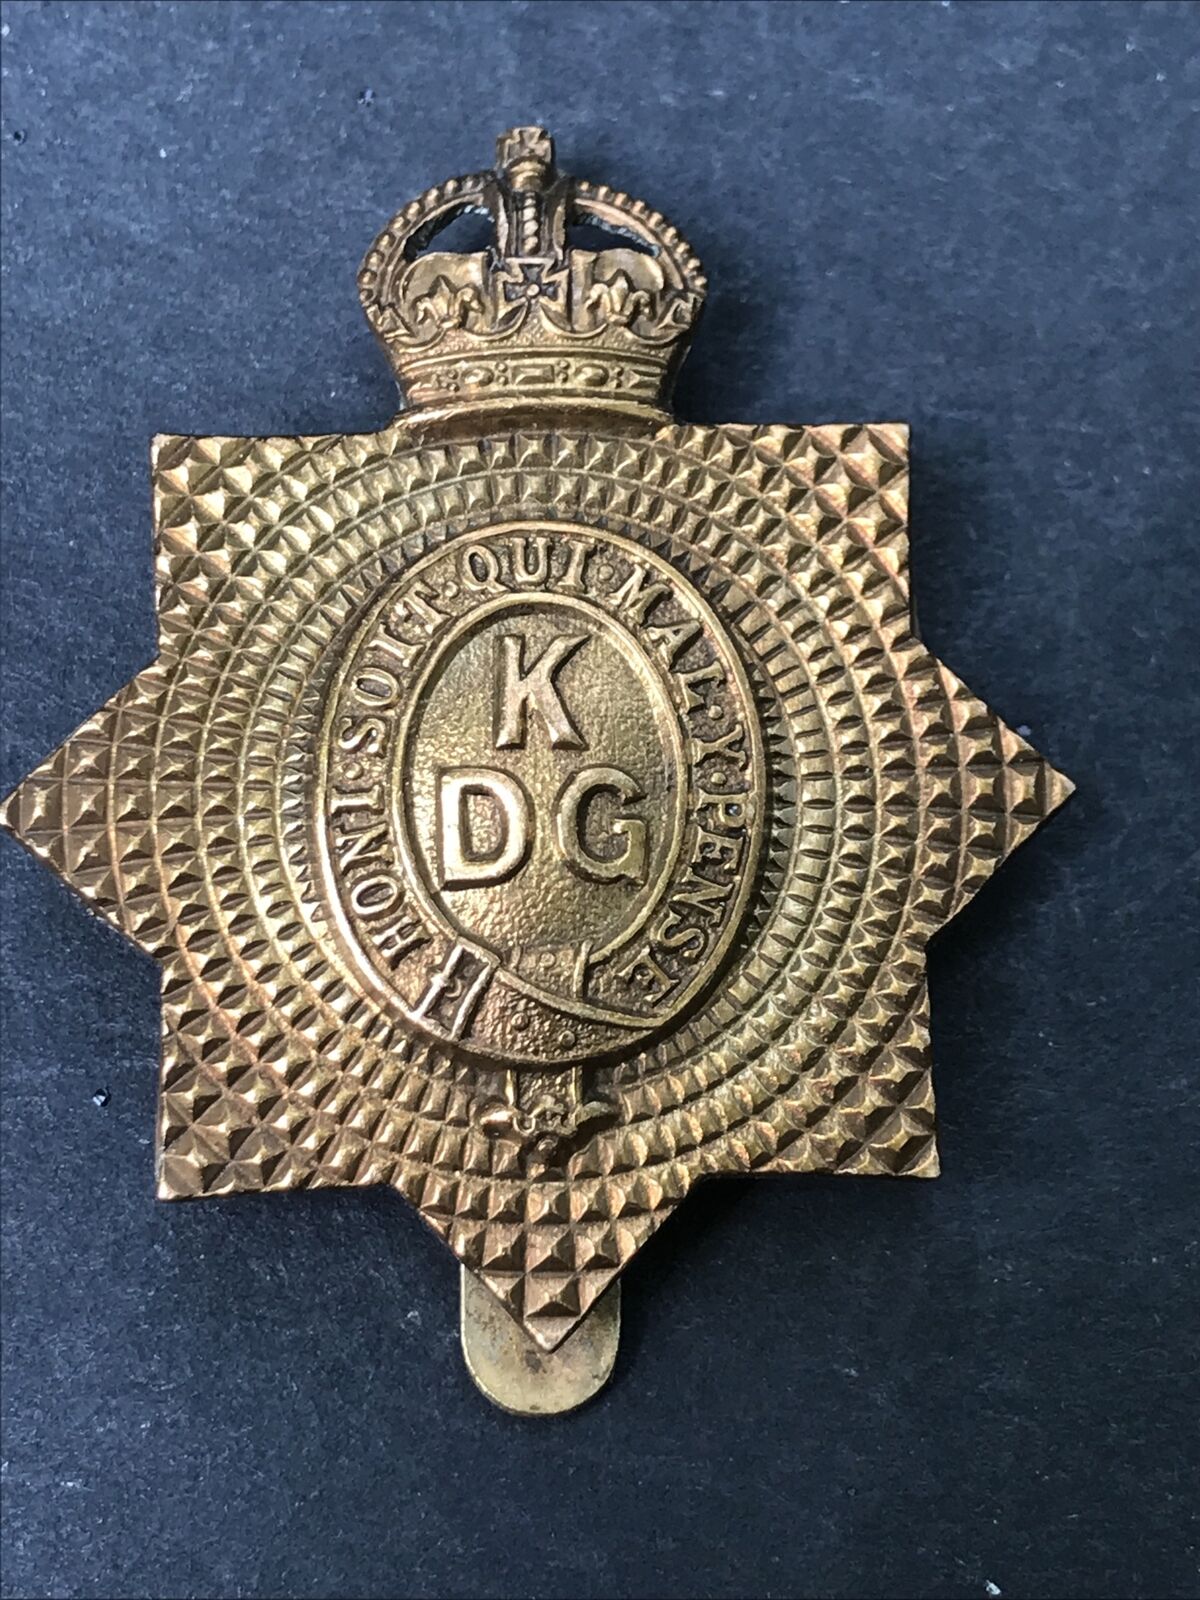 1st Kings Dragoon Guards  1916 Economy Issue Original Cap Badge